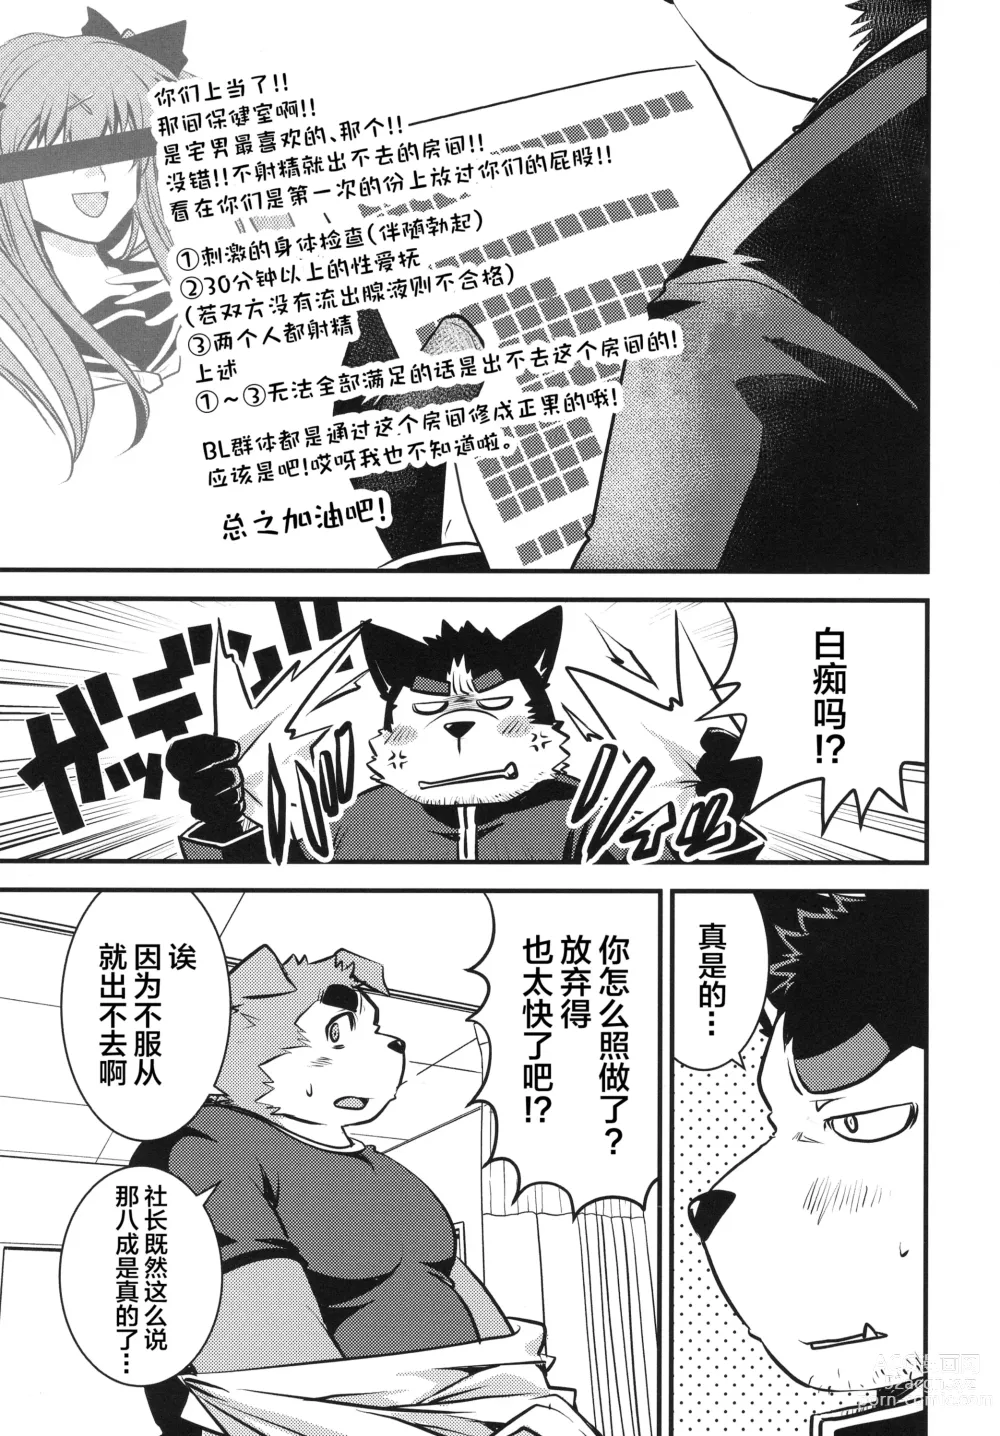 Page 11 of doujinshi Eccentric Shintai Kensa